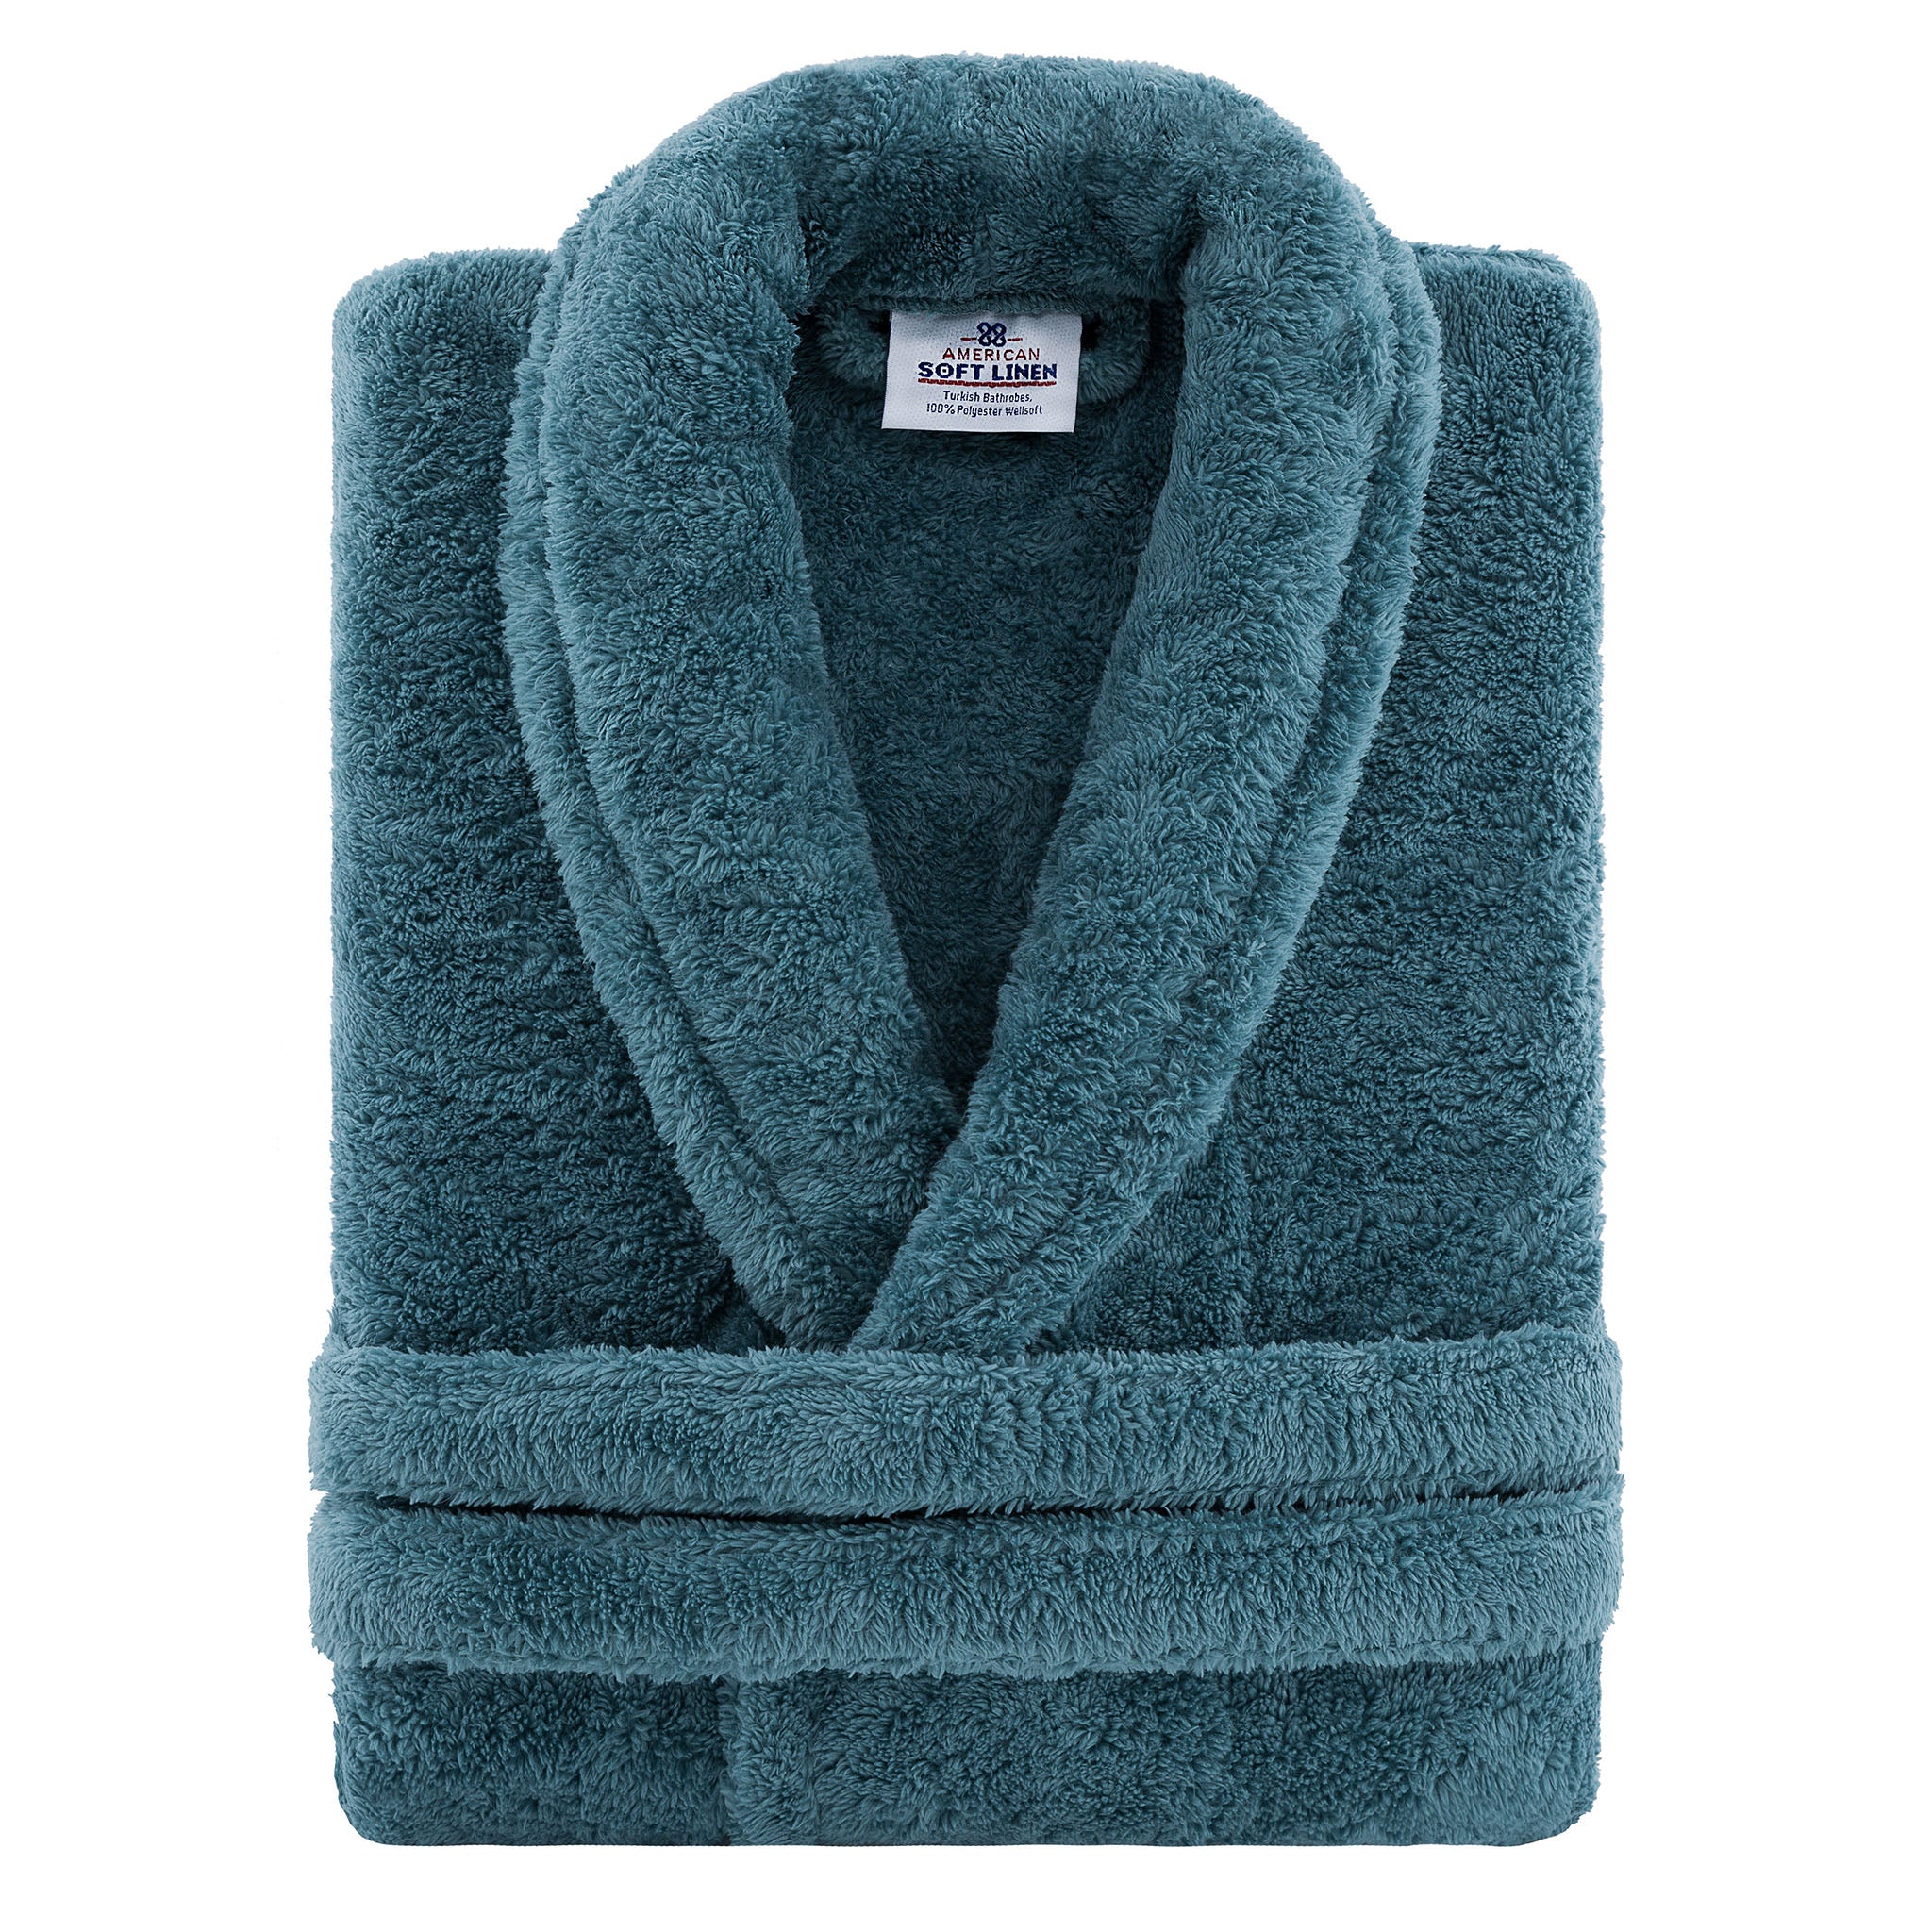 American Soft Linen Super Soft, Absorbent and Fluffy, Unisex Fleece Bathrobe L-XL-colonial-blue-3